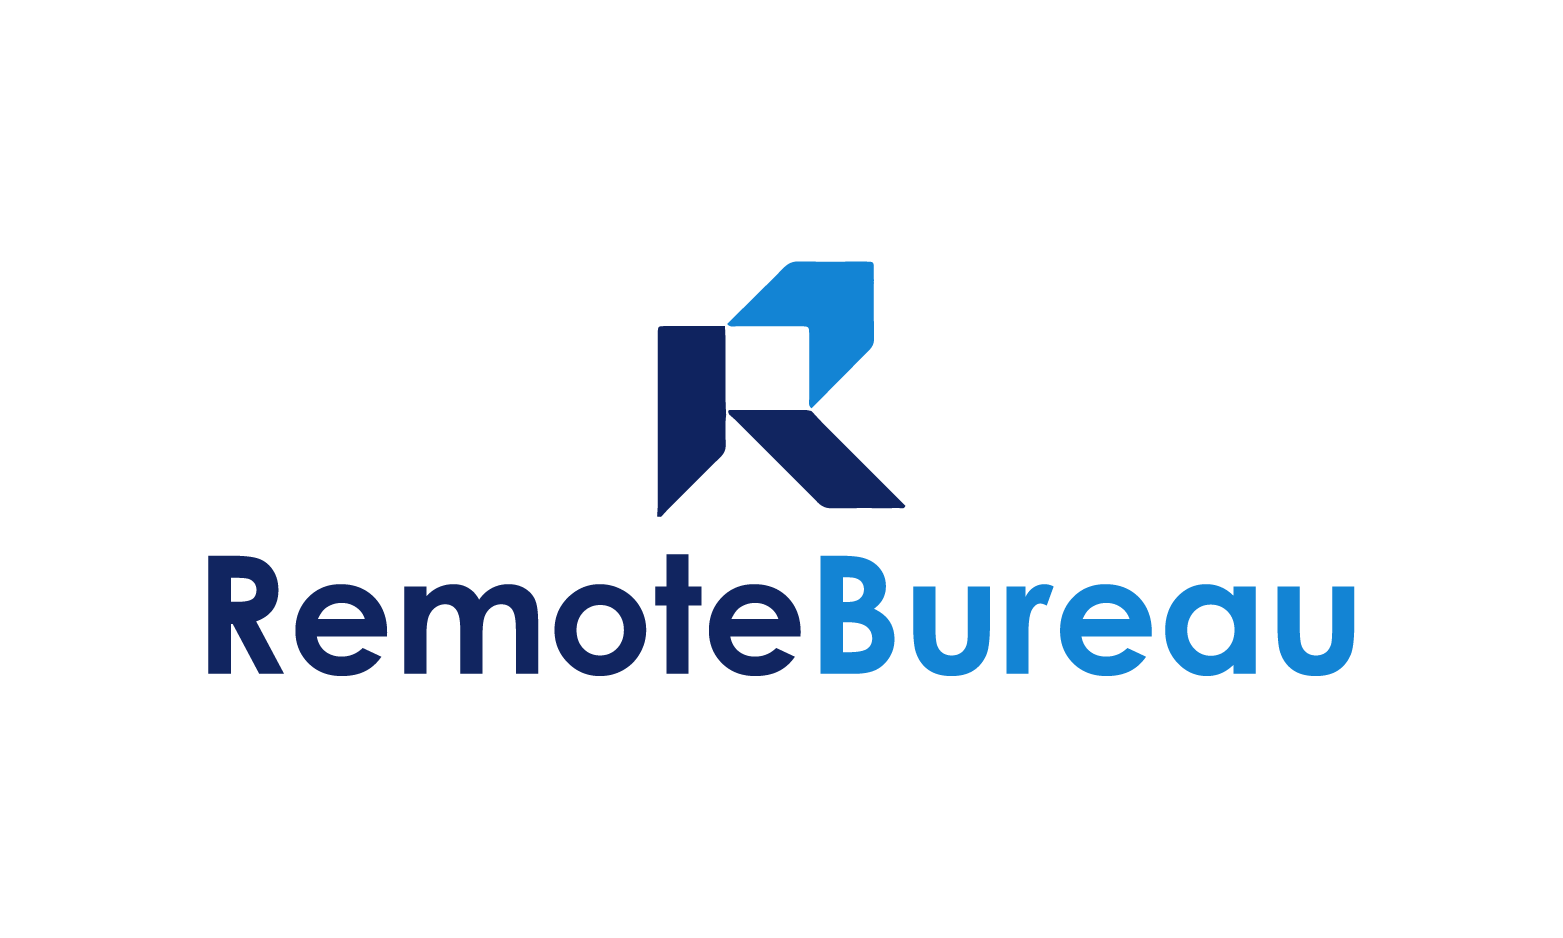 RemoteBureau.com - Creative brandable domain for sale